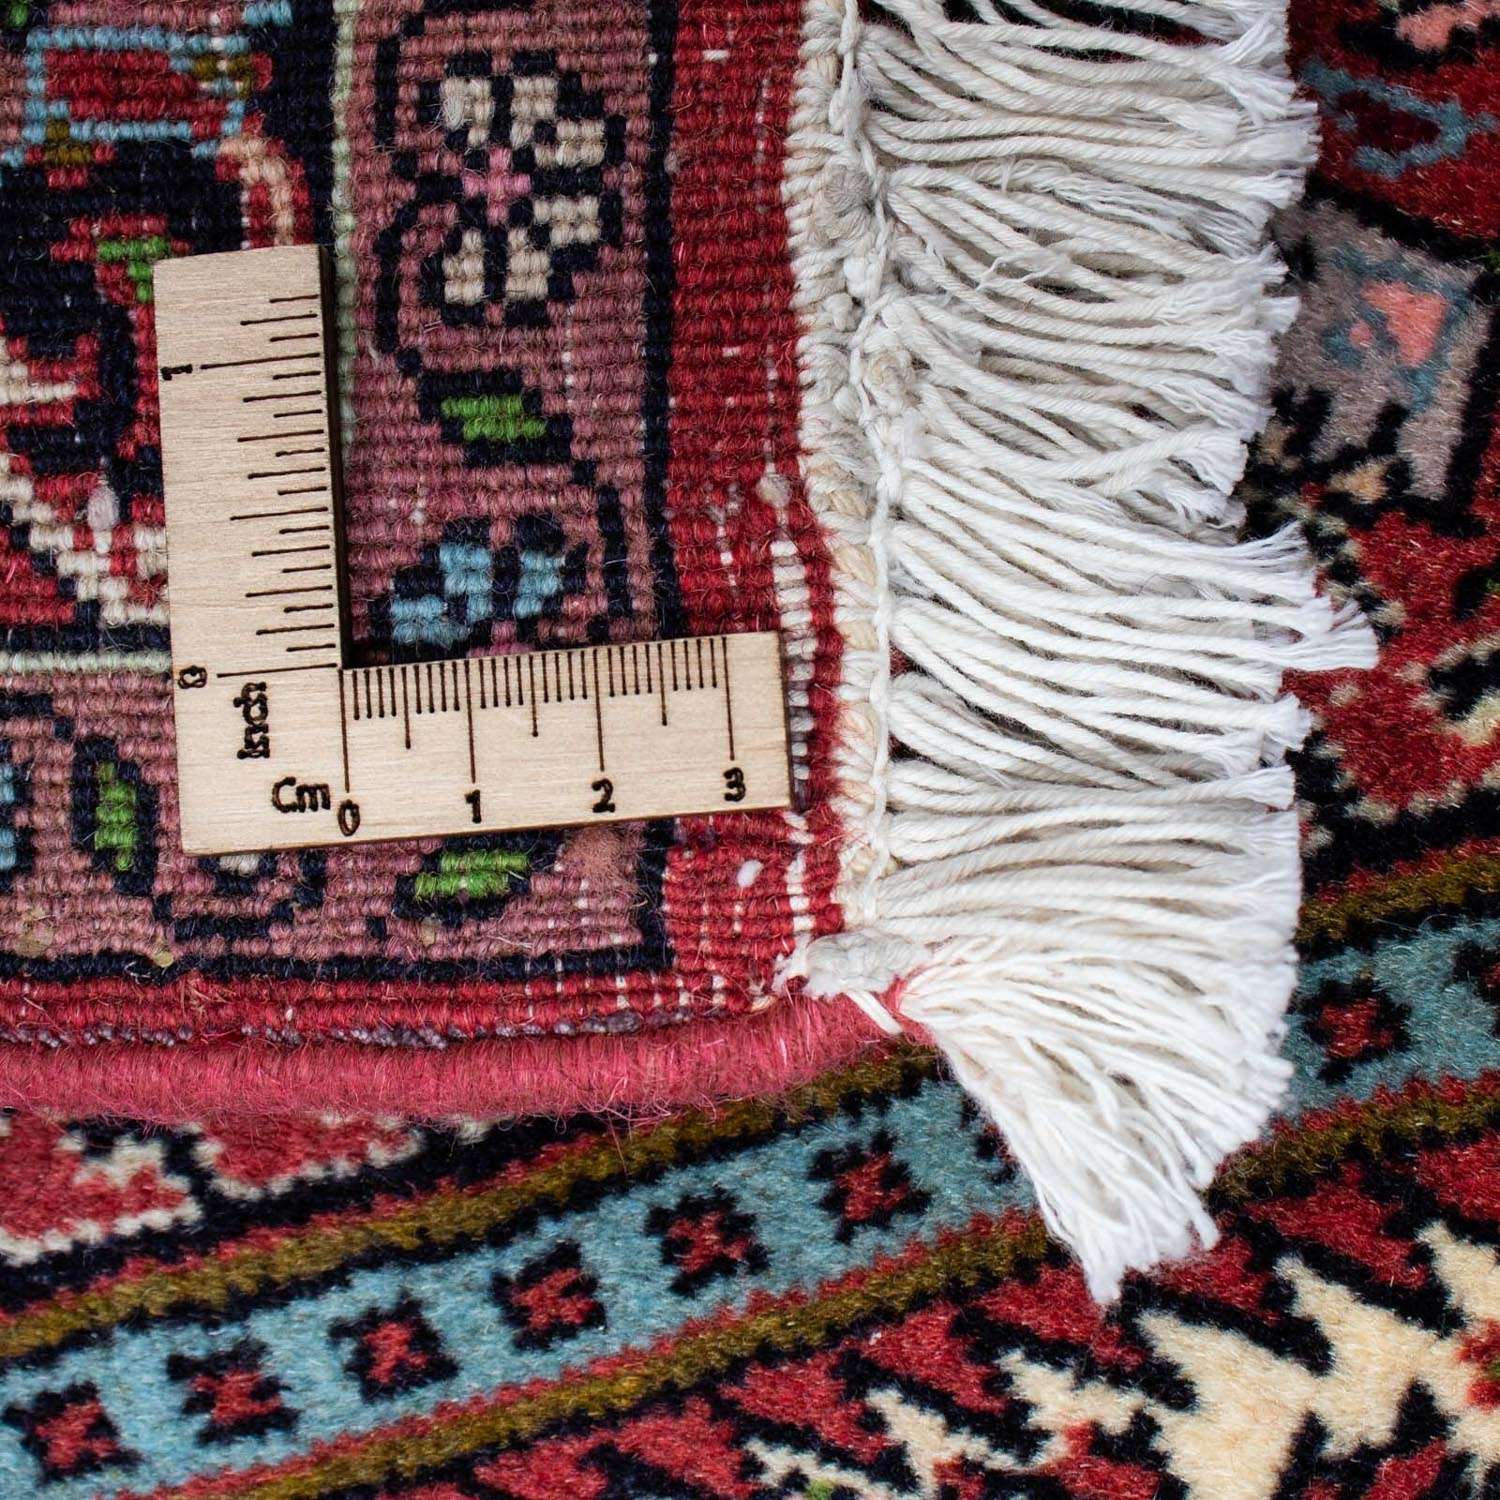 Persisk tæppe - Bijar - 233 x 140 cm - rød